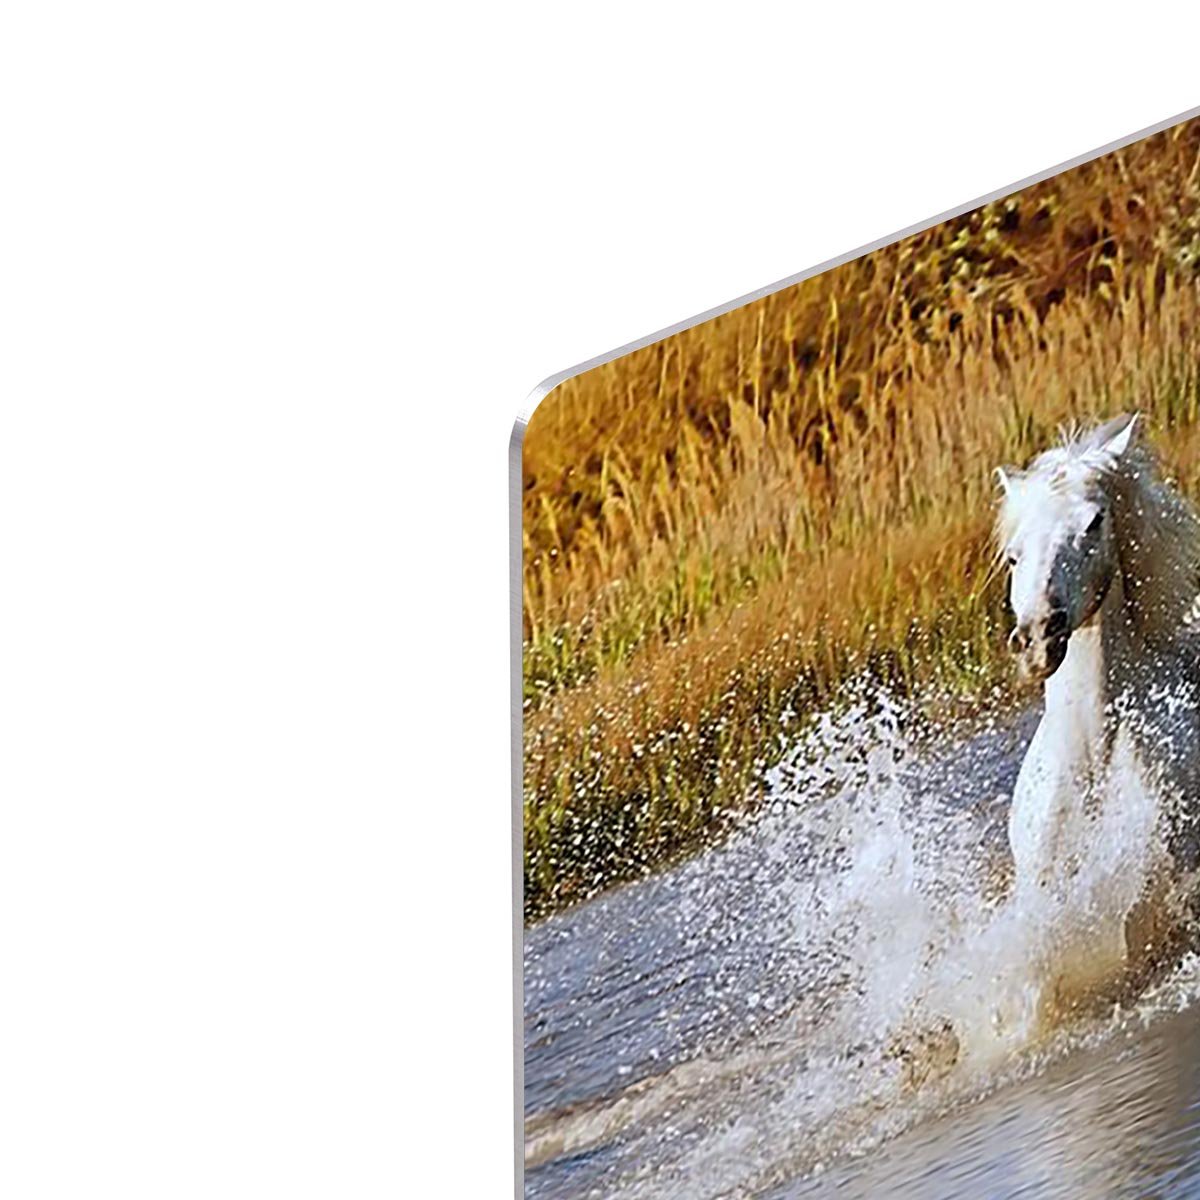 Heard of White Horses Running and splashing HD Metal Print - Canvas Art Rocks - 4